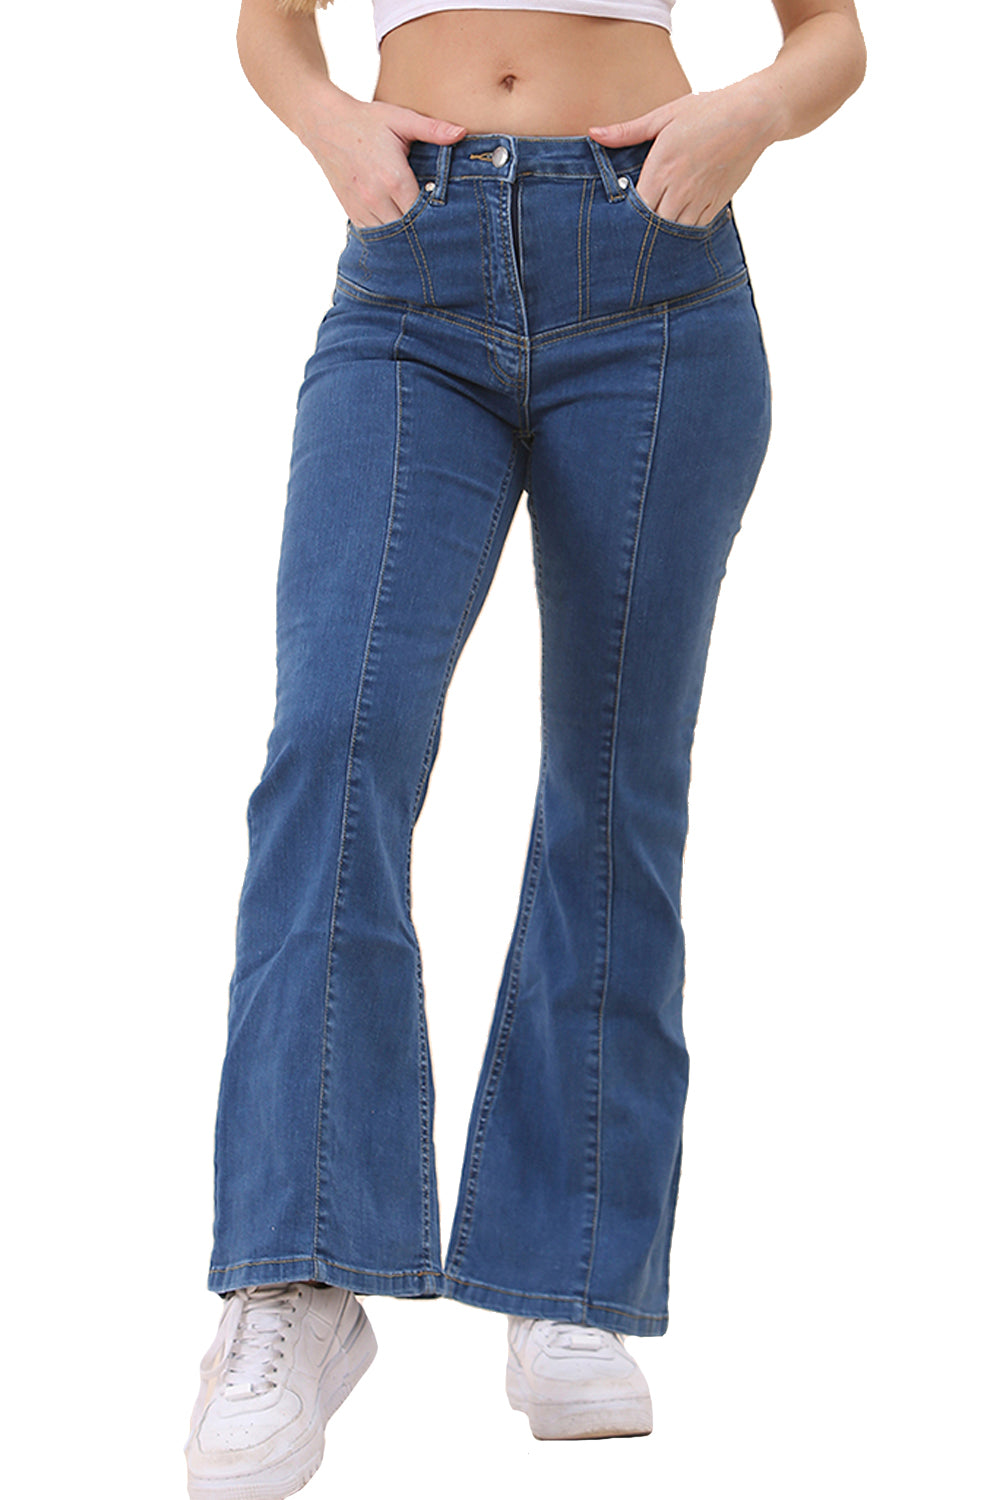 Sienna Bell Bottom Denim Jeans